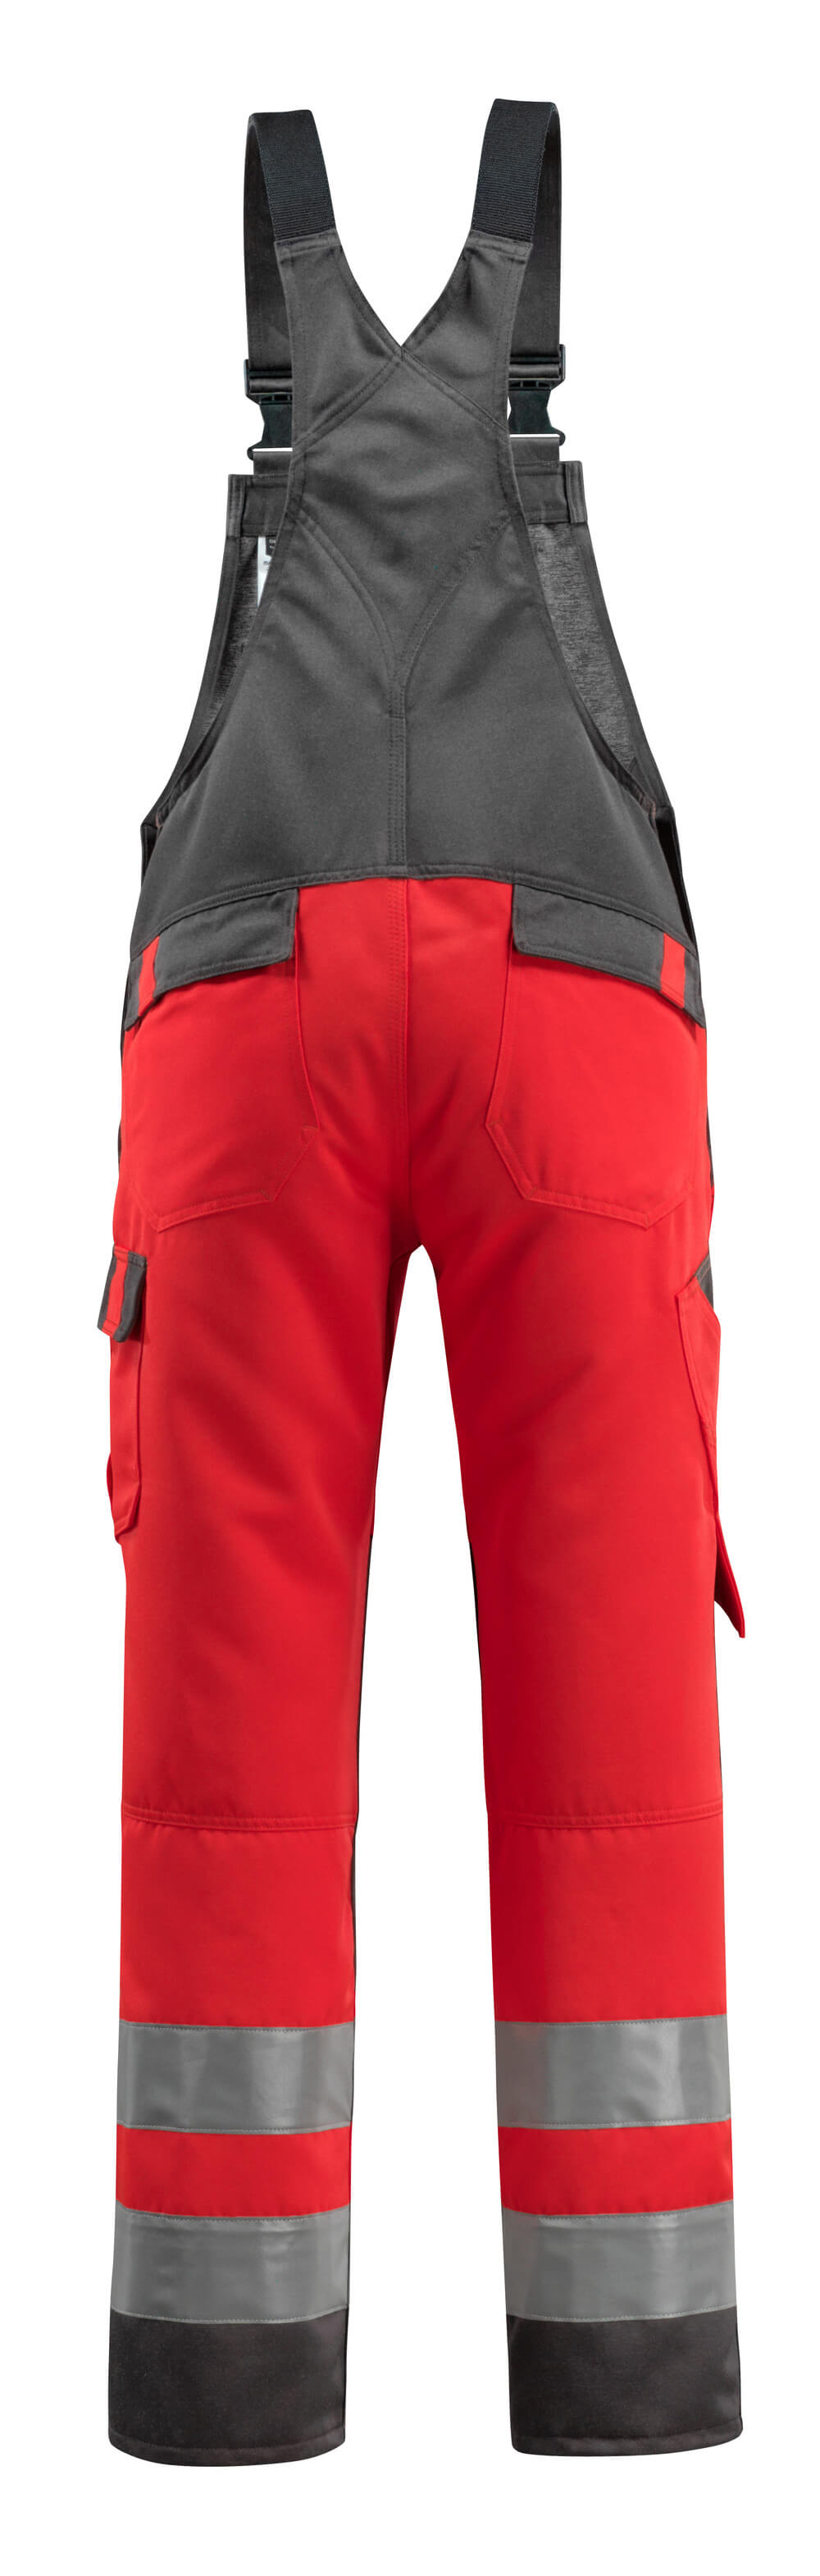 Mascot SAFE LIGHT  Gosford Bib & Brace with kneepad pockets 15969 hi-vis red/dark anthracite